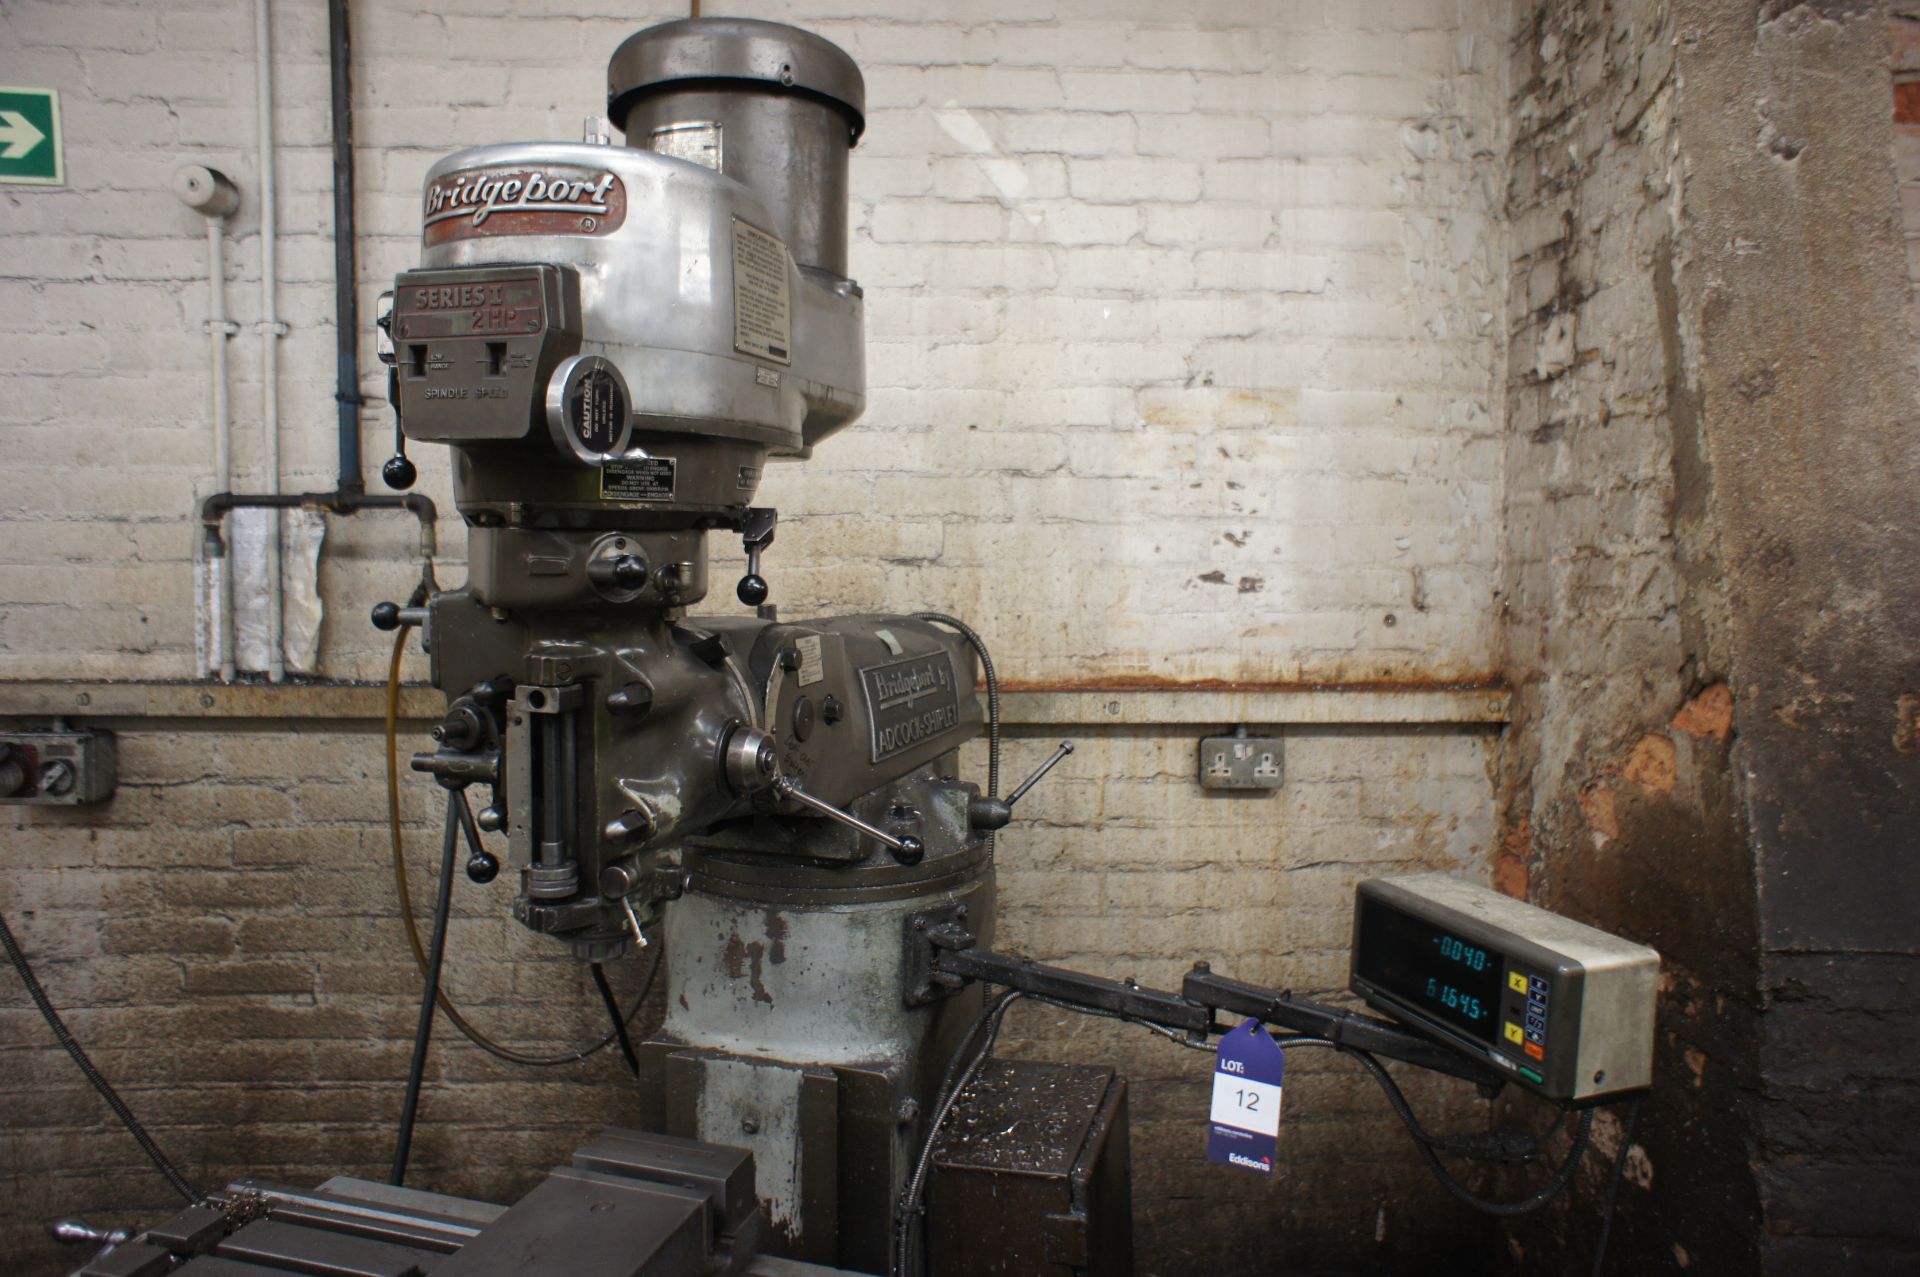 Bridgeport Series 1, 2HP Turret Milling Machine wi - Image 3 of 5